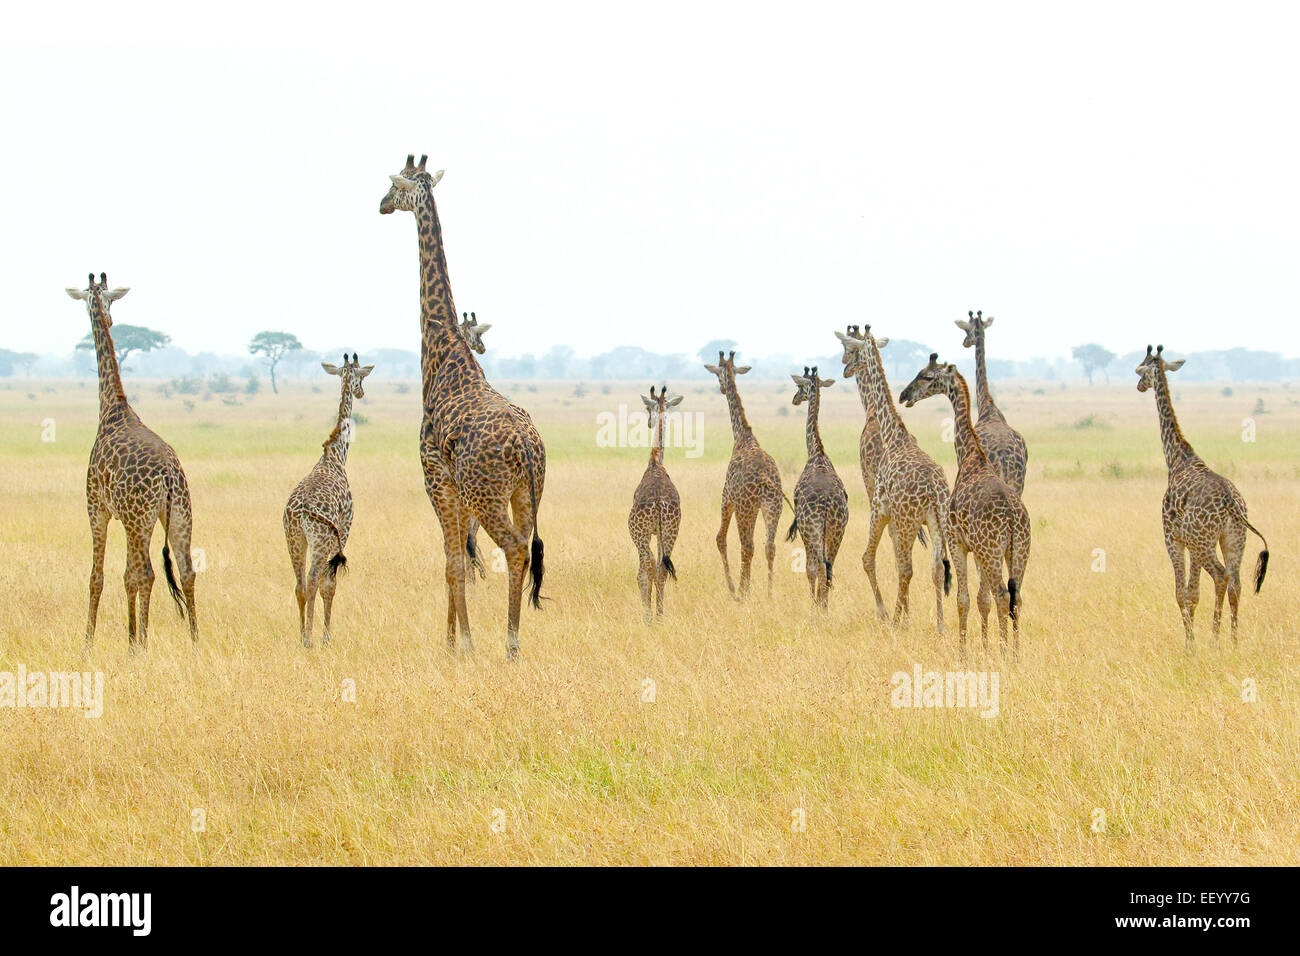 A group of giraffes (Giraffa camelopardalis) in Serengeti National Park, Tanzania Stock Photo